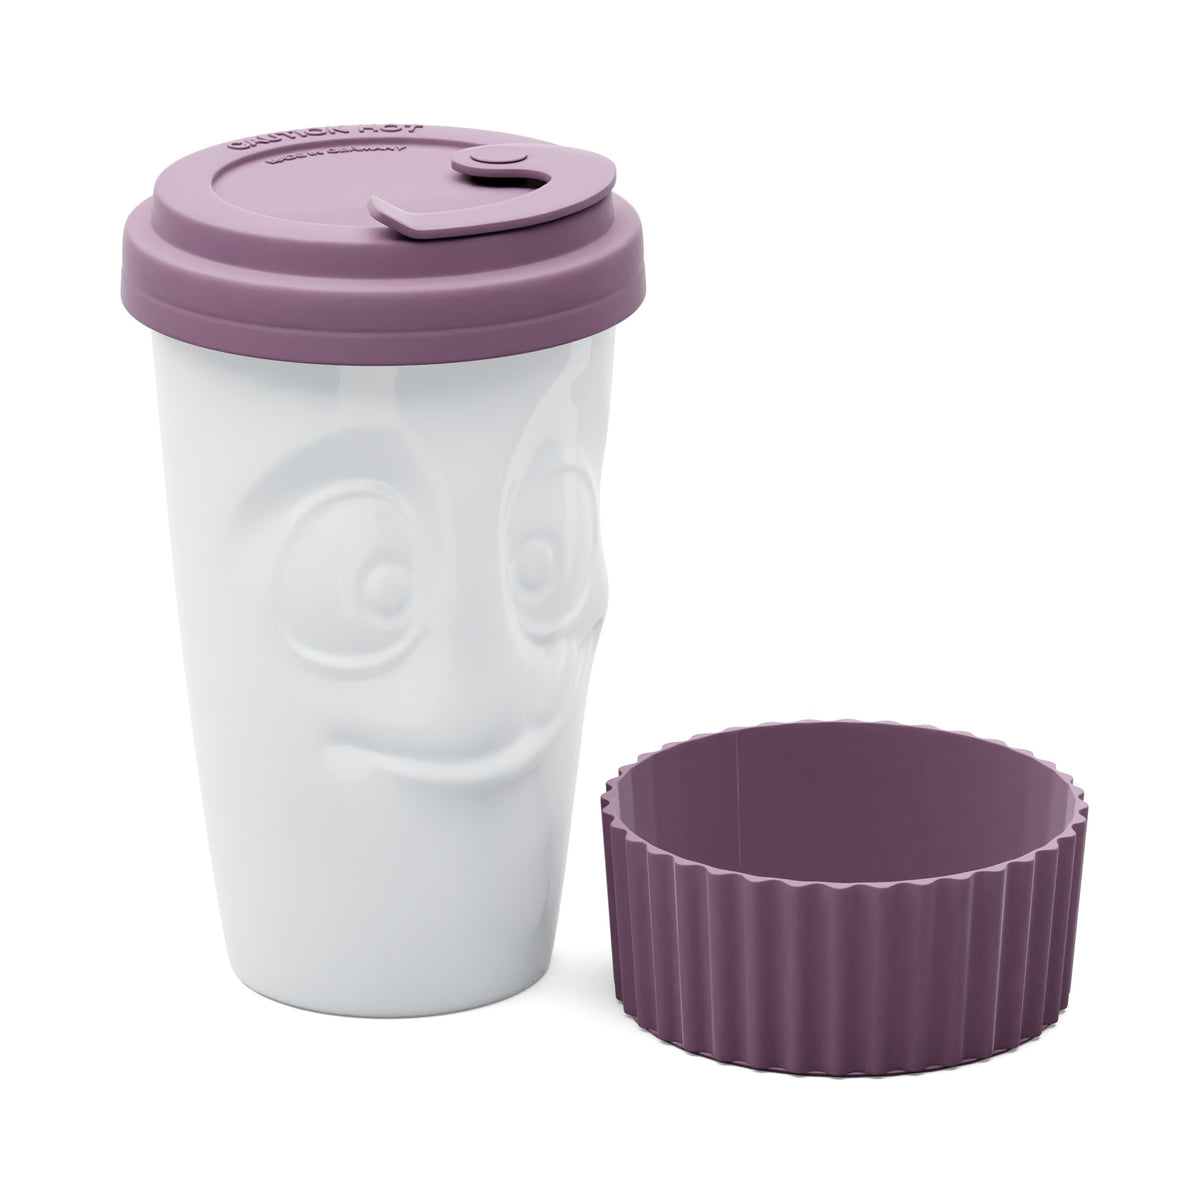 Mug To Go Tasty – Wineberry Color (No Handle, Protective Sleeve